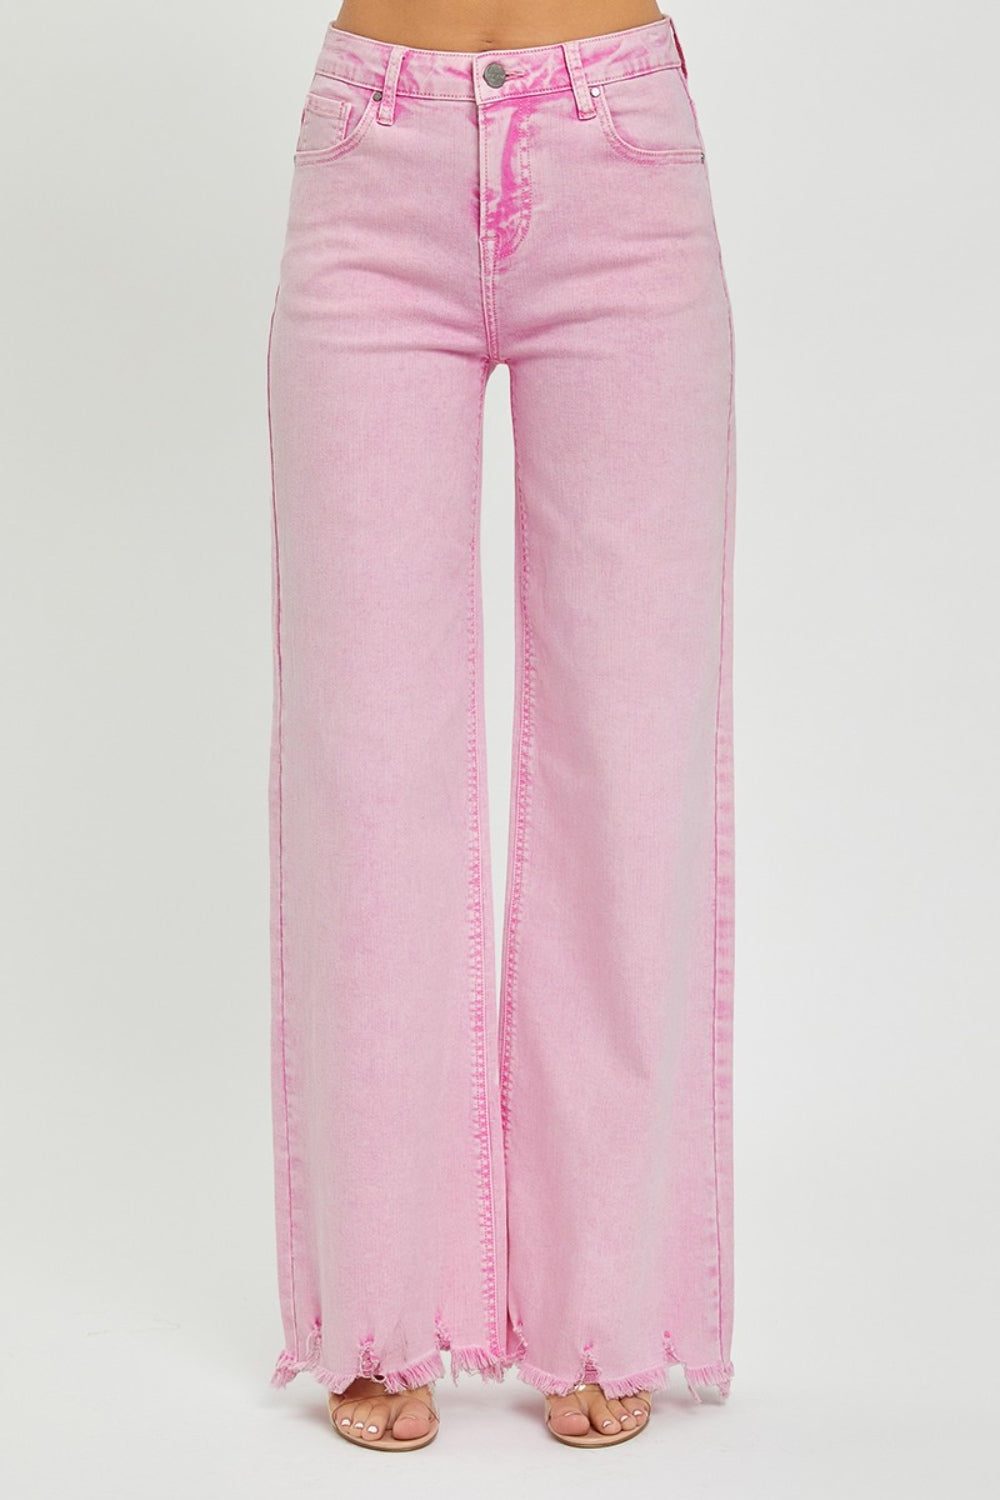 Acid Pink High Rise Wide Leg Jeans